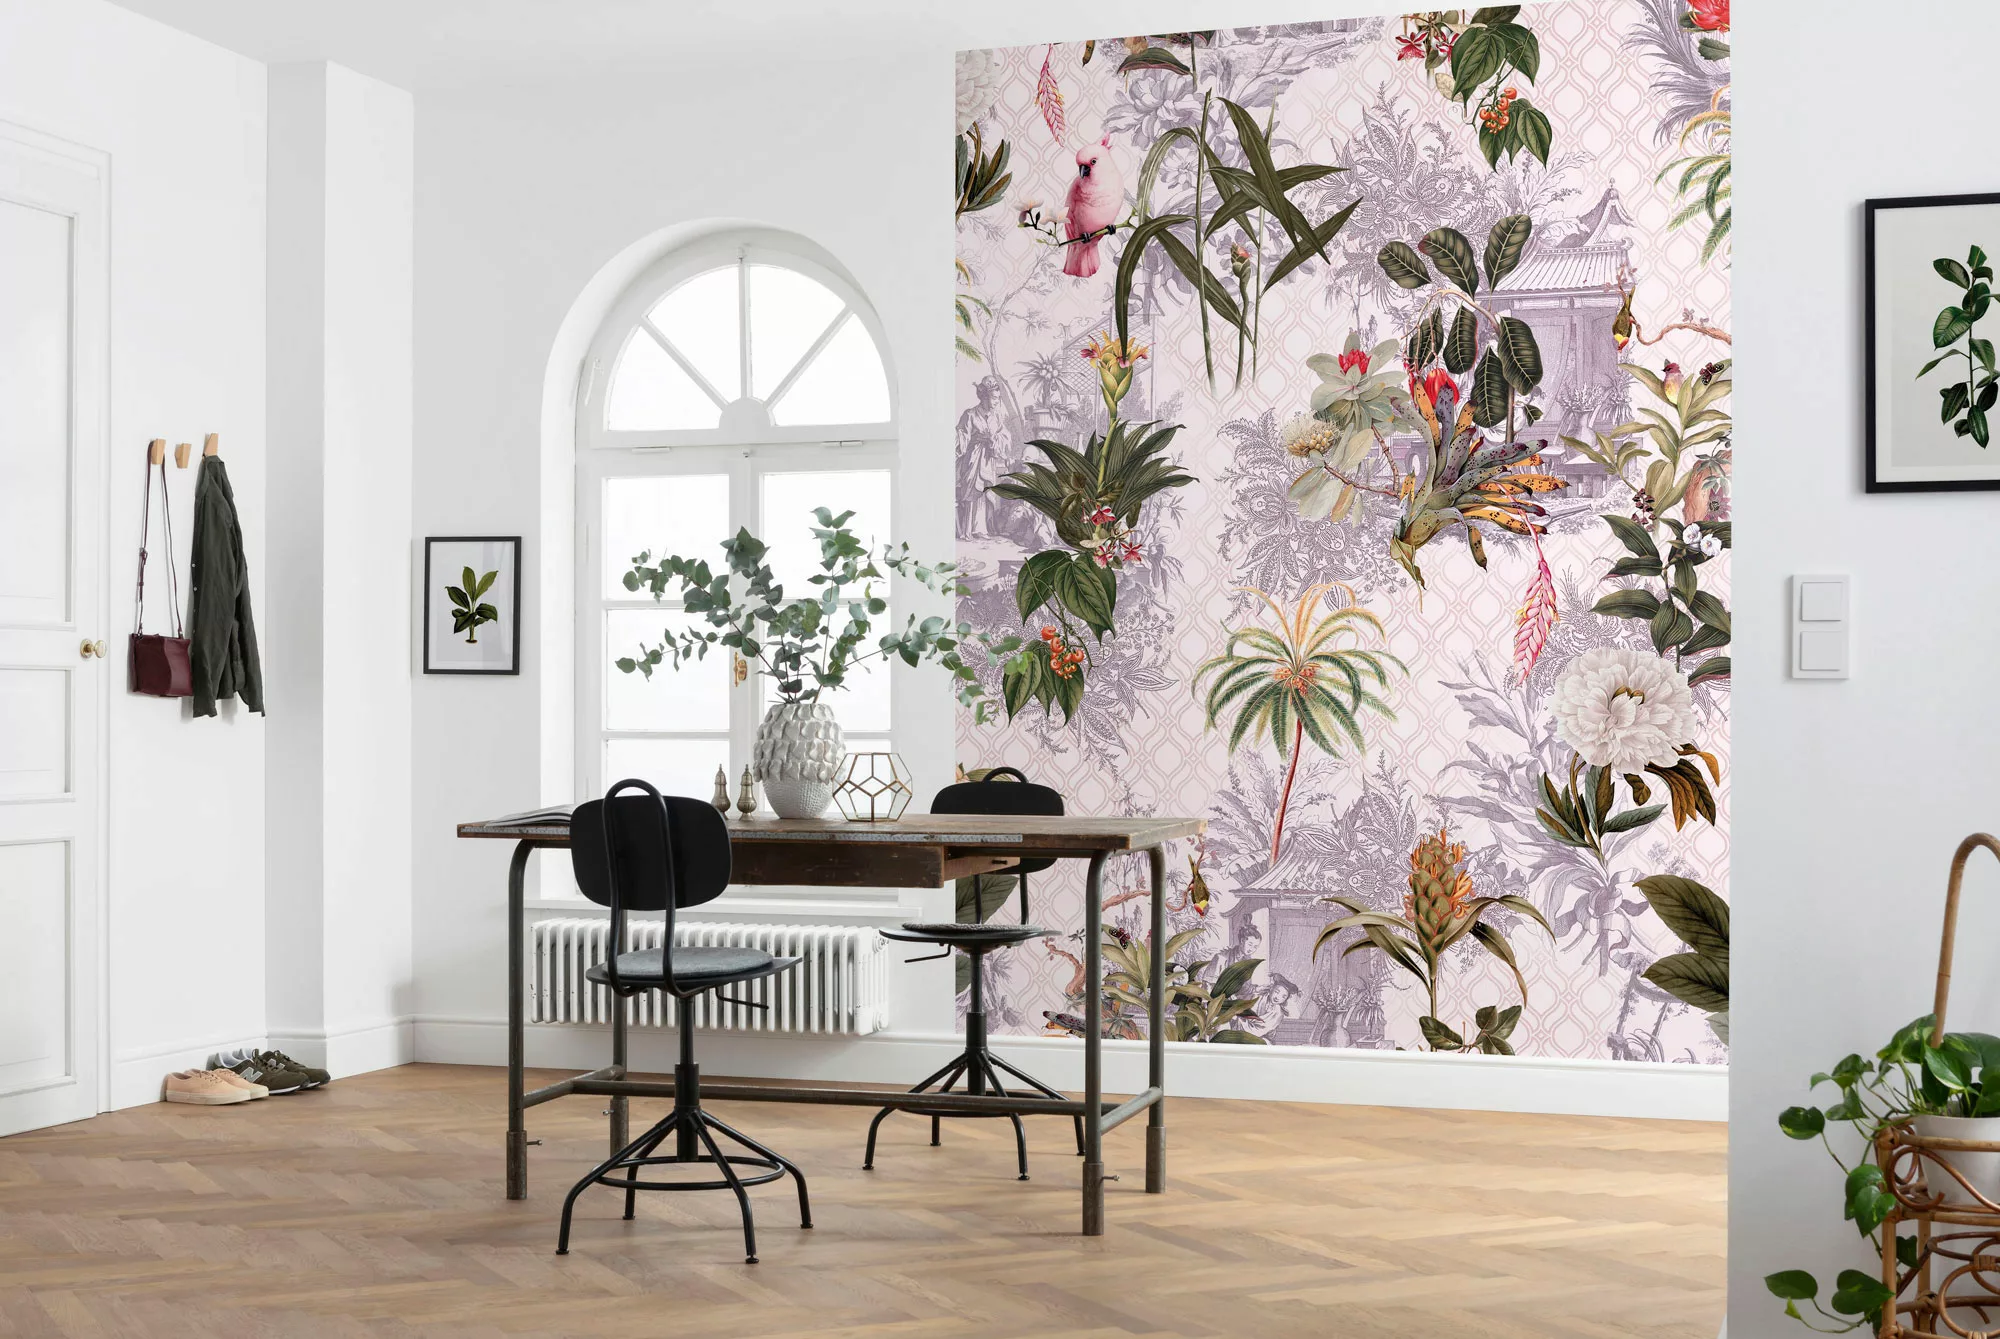 KOMAR Vlies Fototapete - Tropicana - Größe 200 x 280 cm mehrfarbig günstig online kaufen